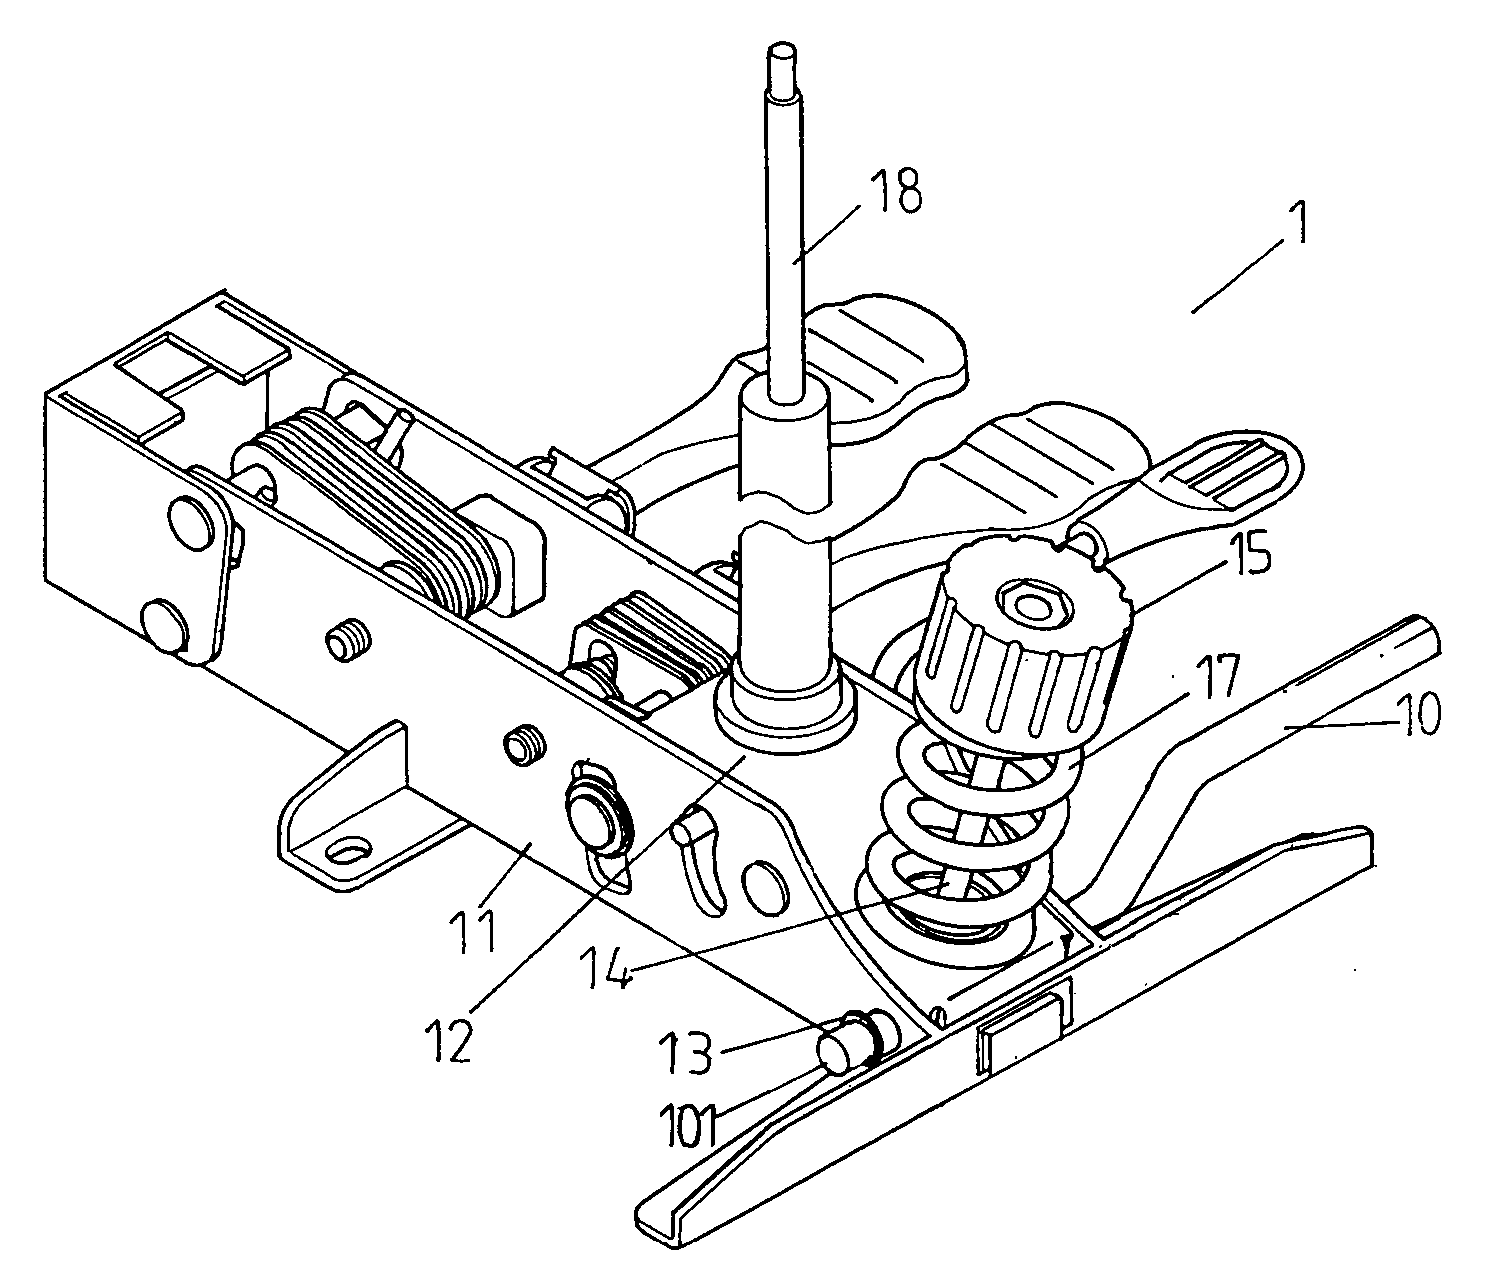 Angle adjusting mechanism for chair